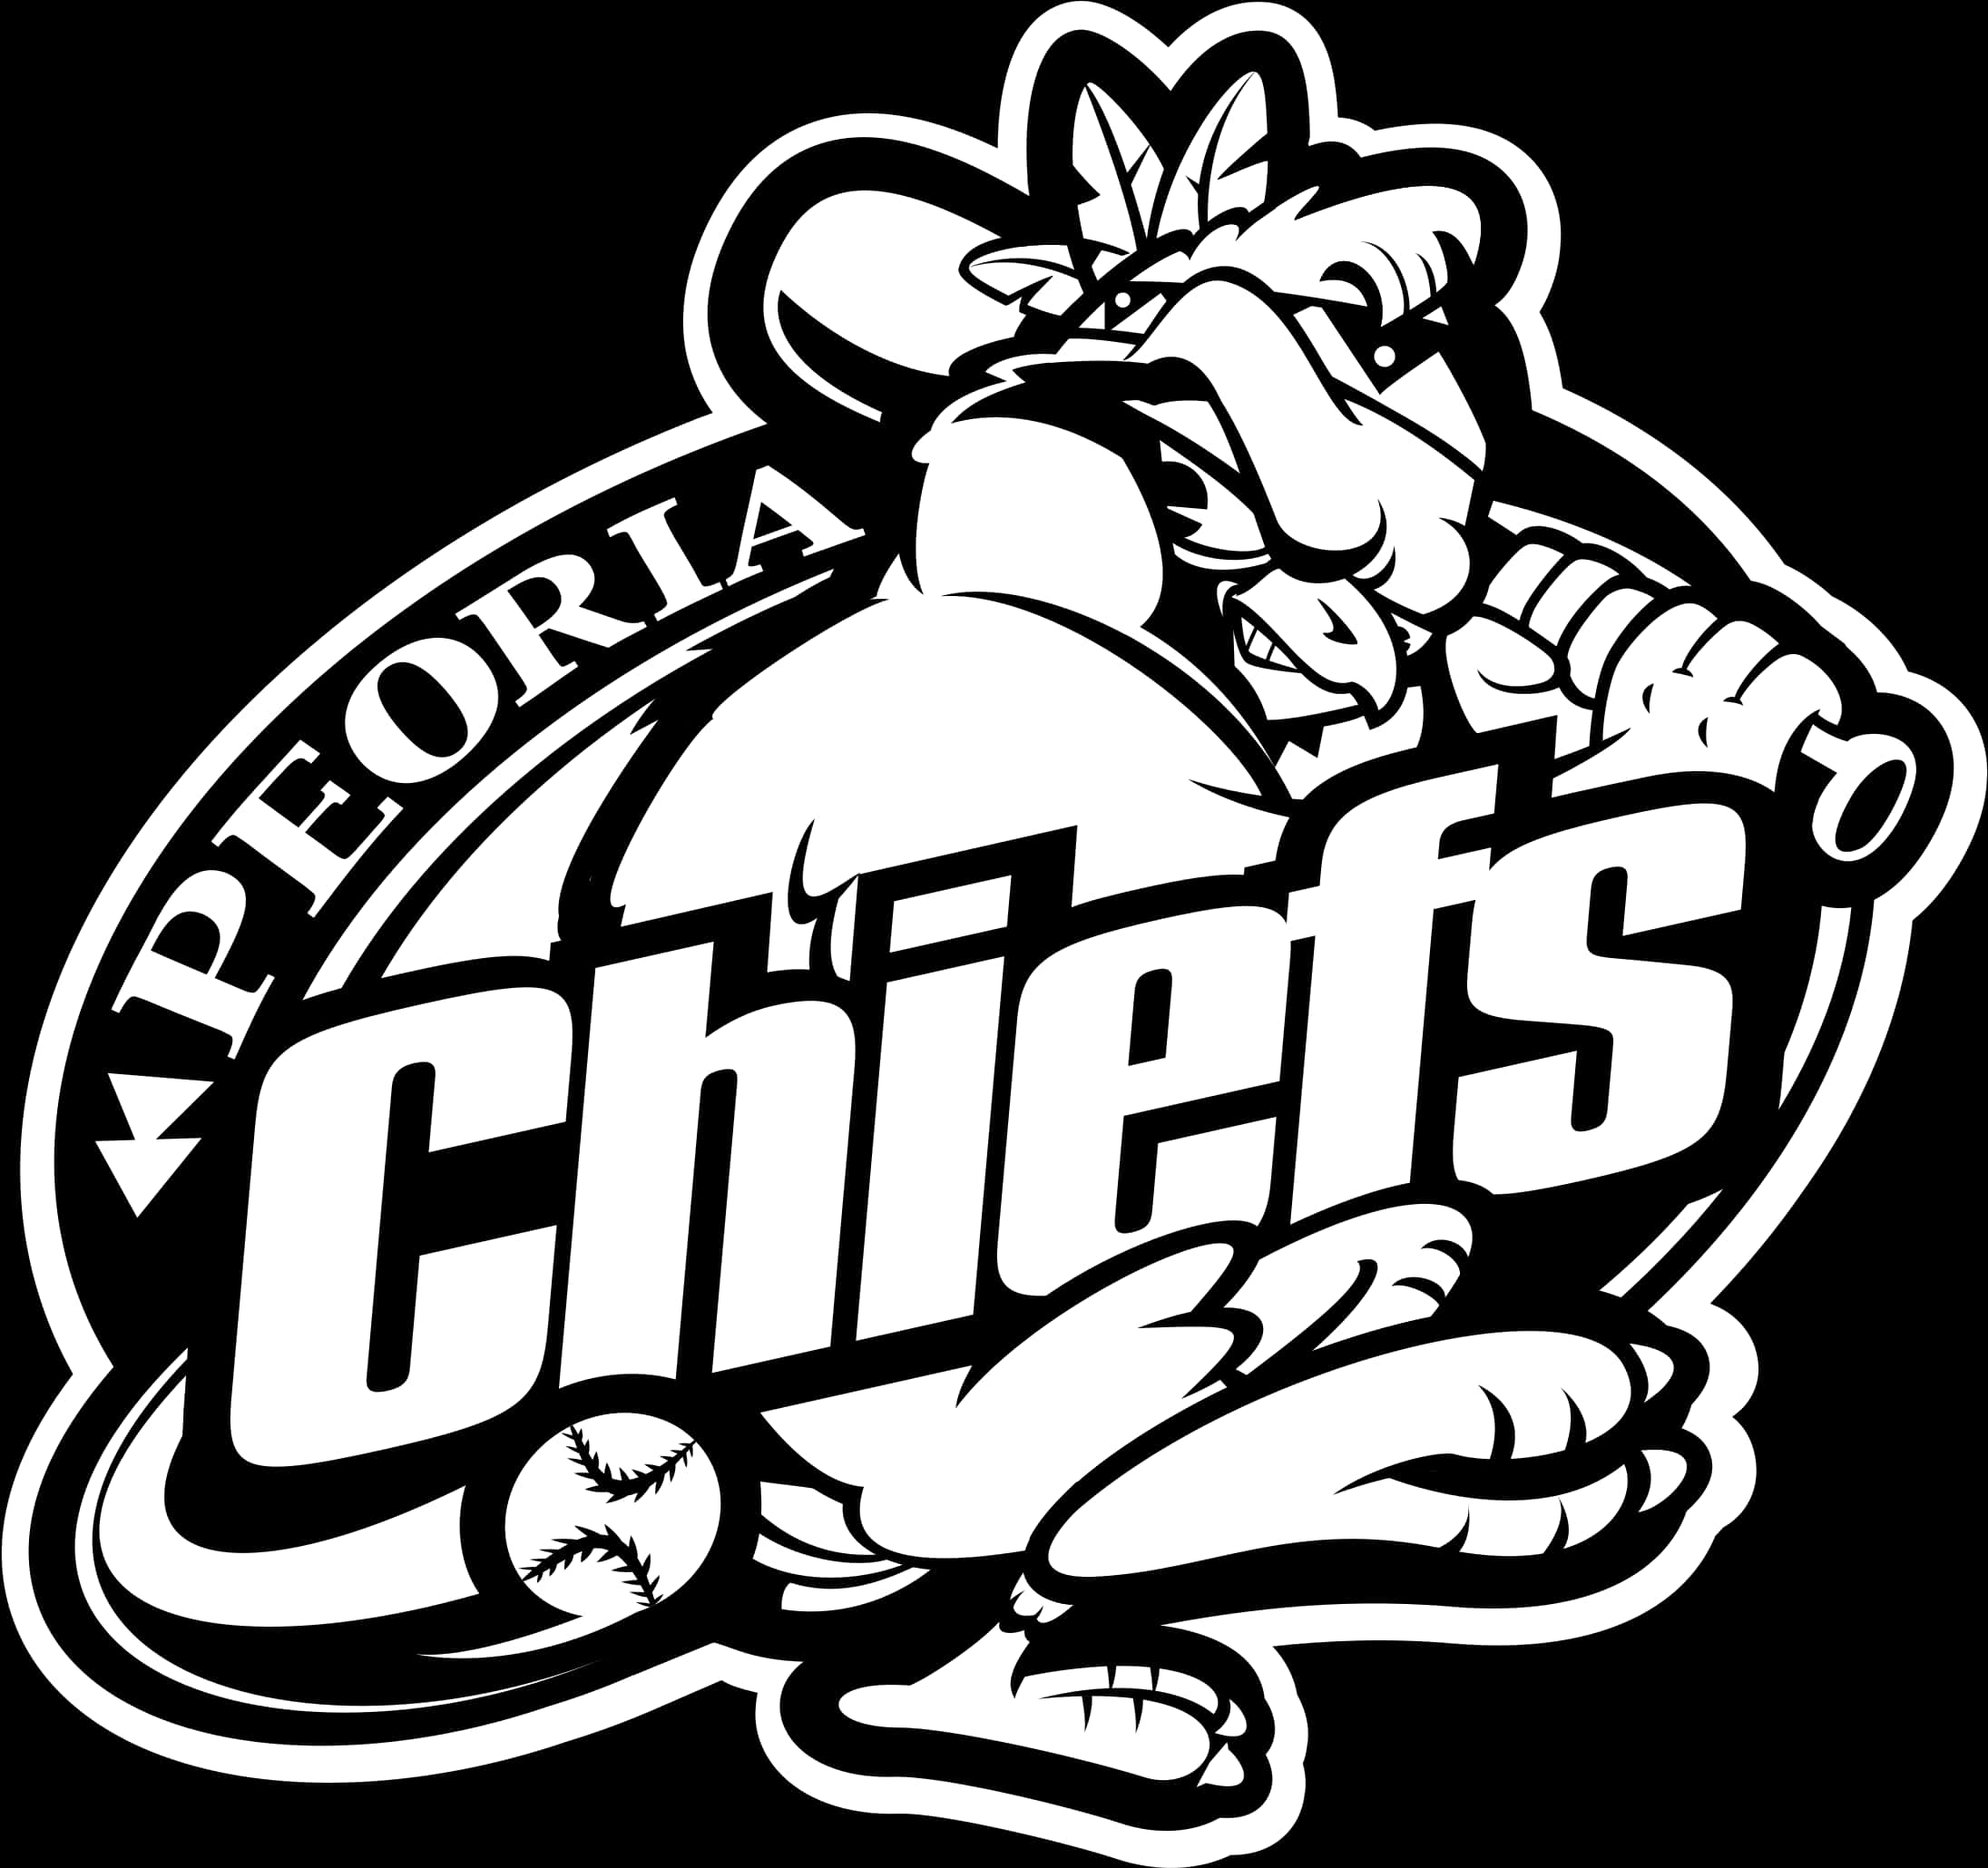 Peoria Chiefs Baseball Logo PNG image